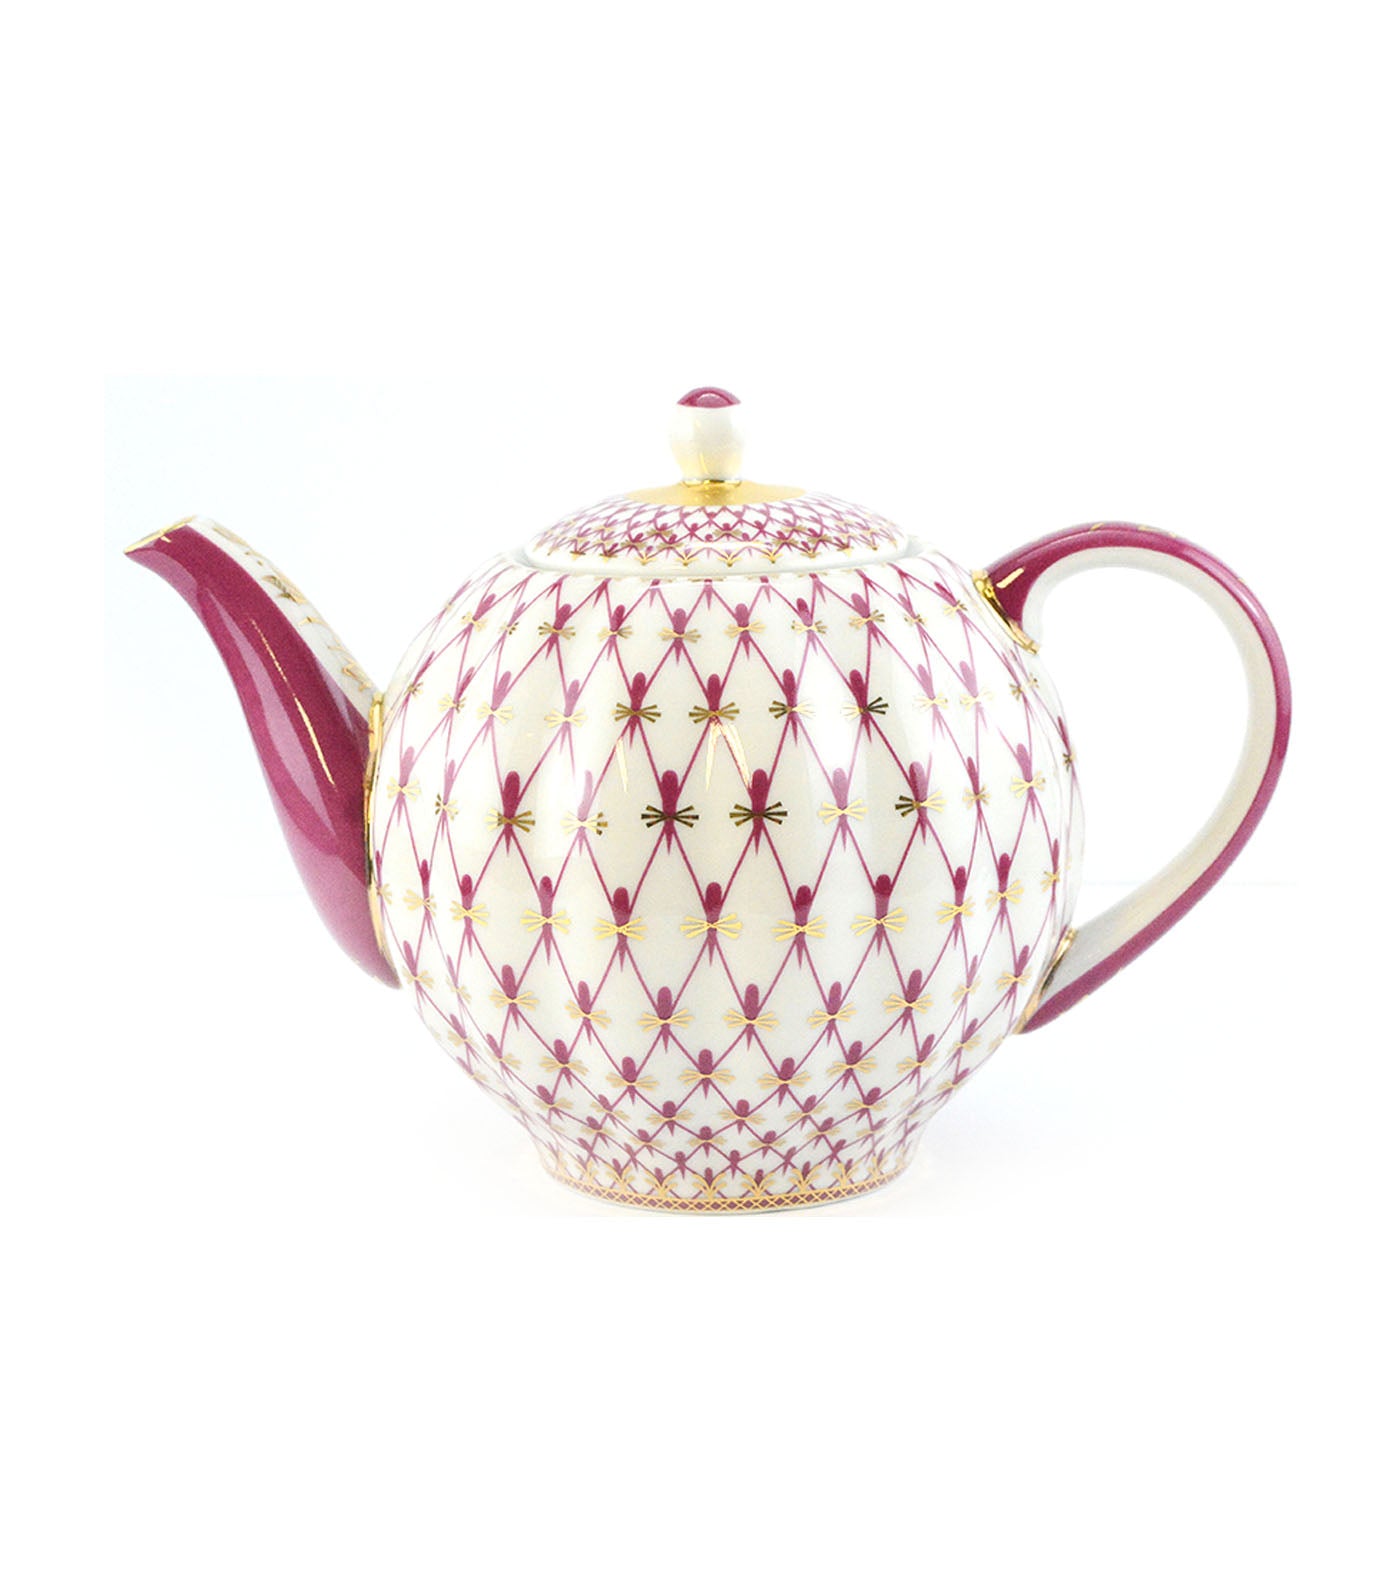  Imperial Porcelain Red Net Tulip Shape Teapot Set